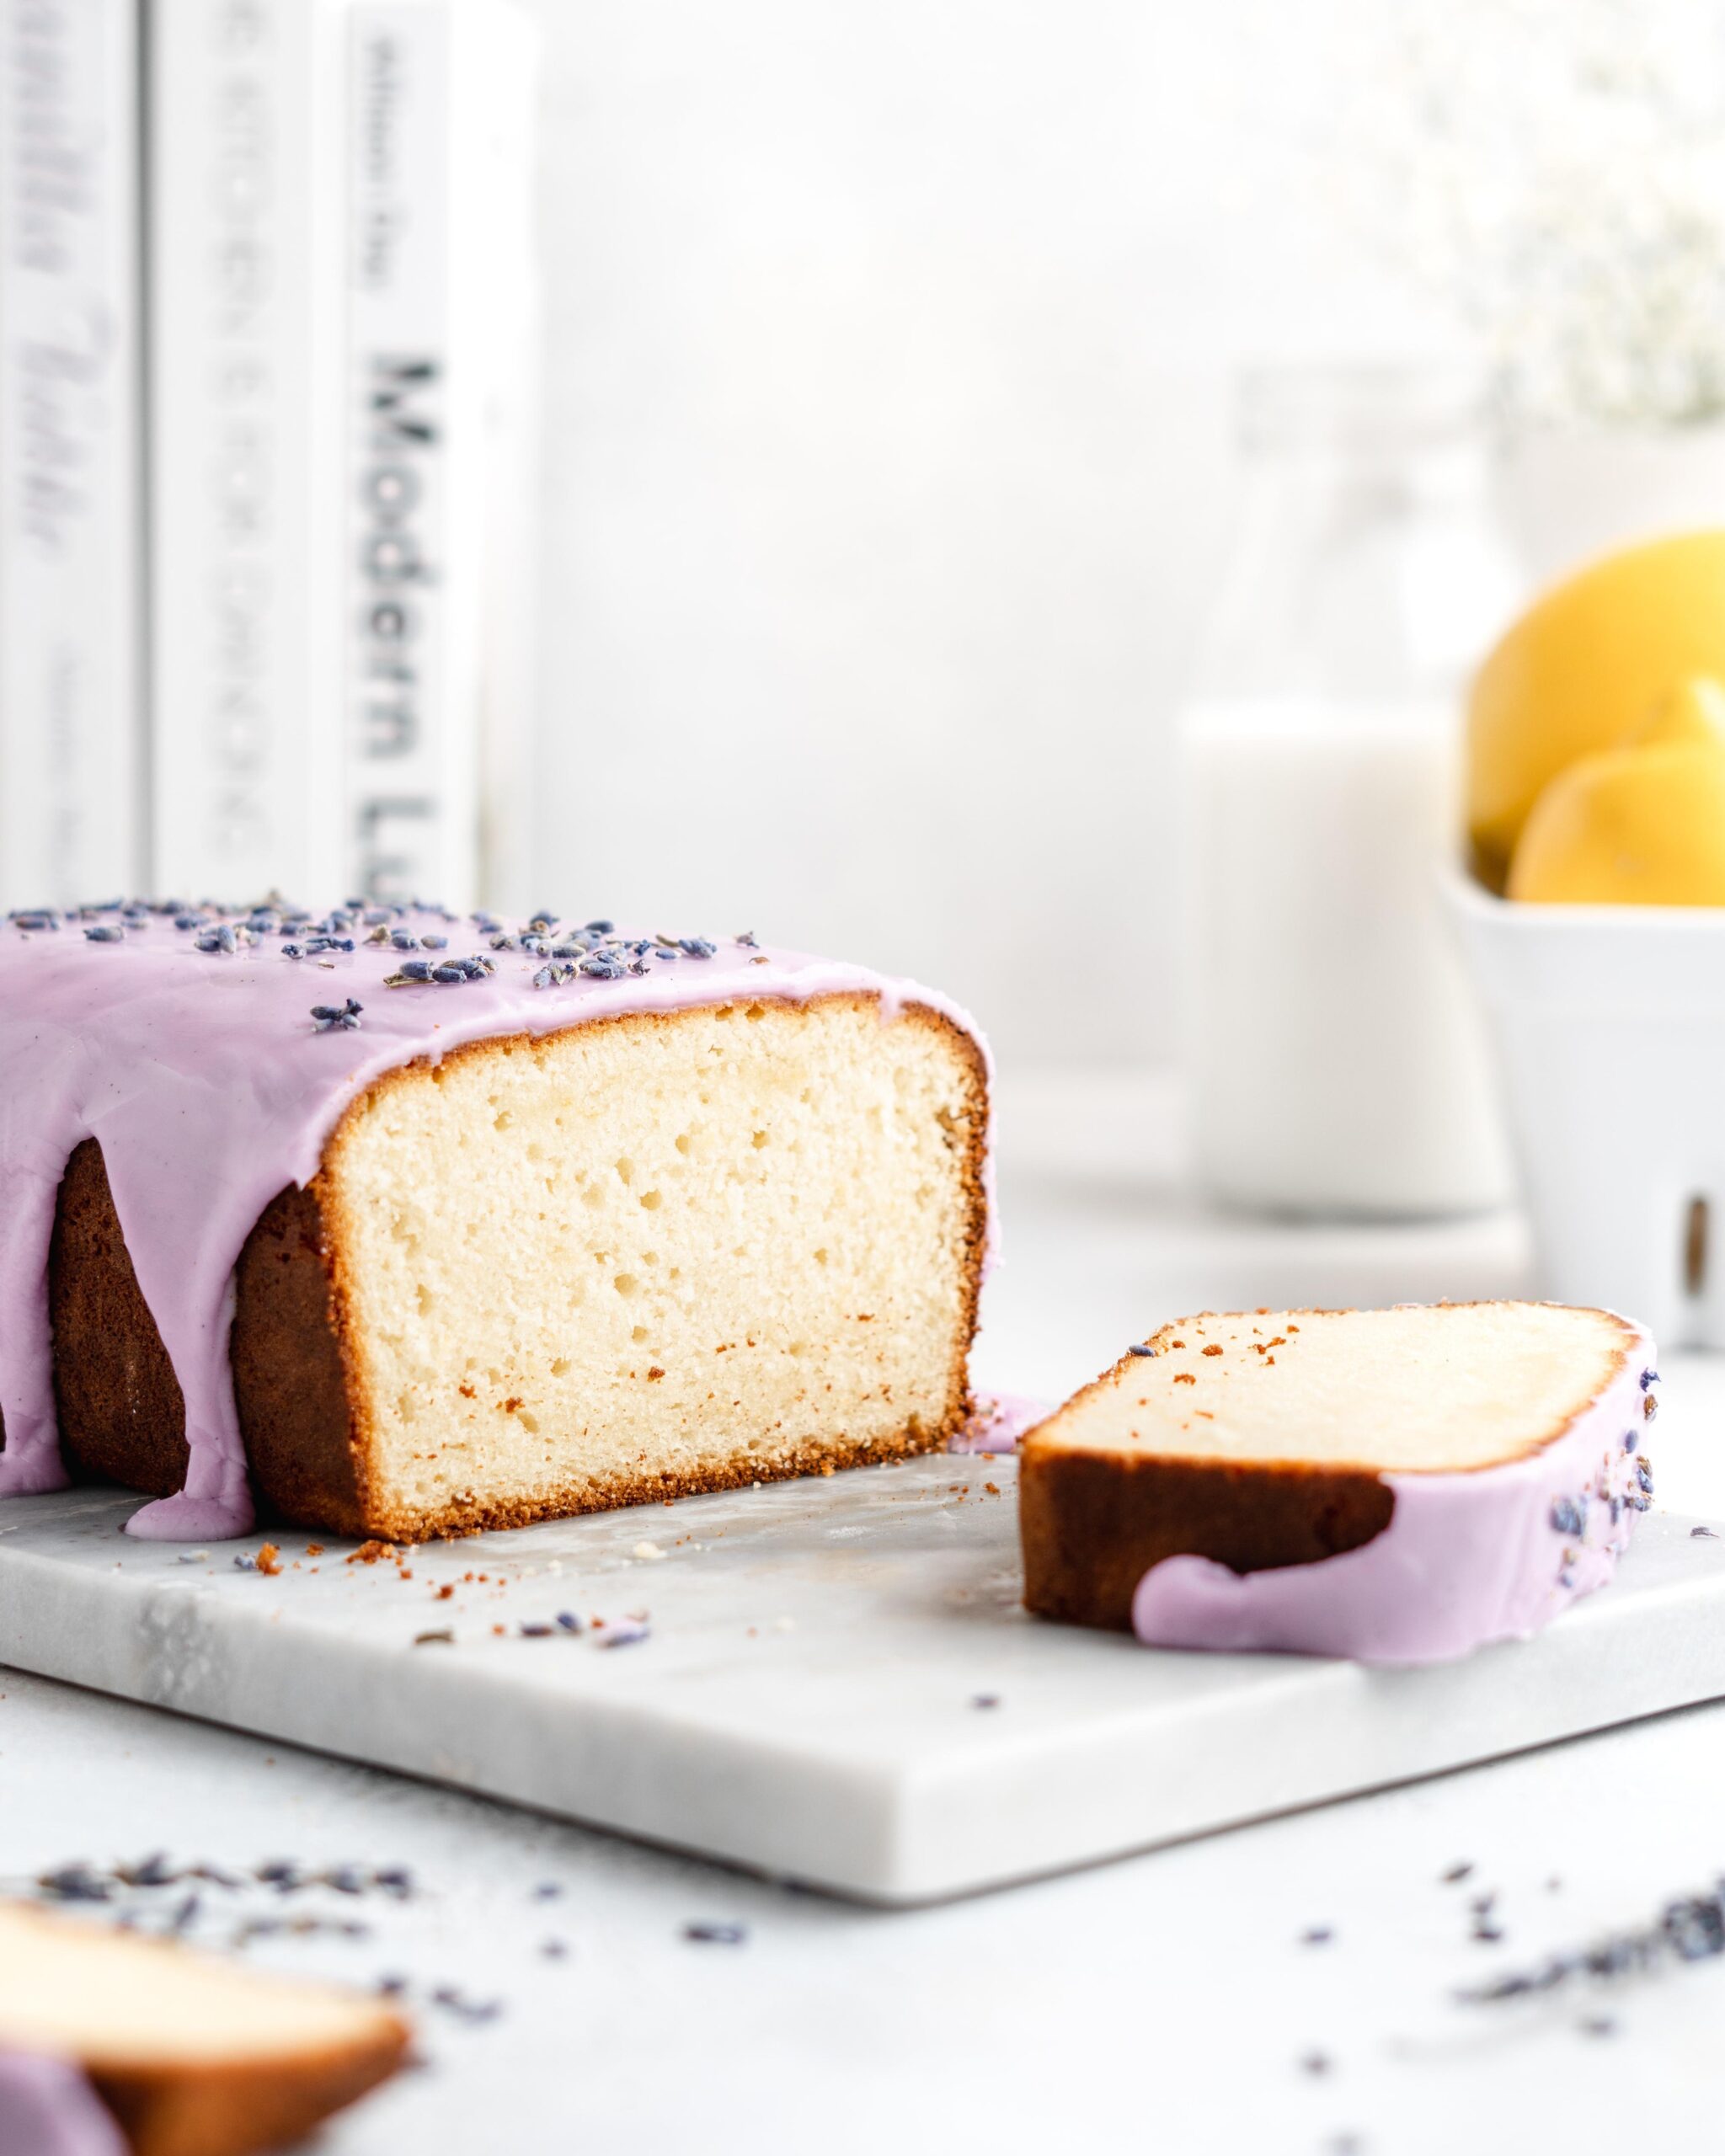  Treat your taste buds with Lavender-Lemon Pound Cake